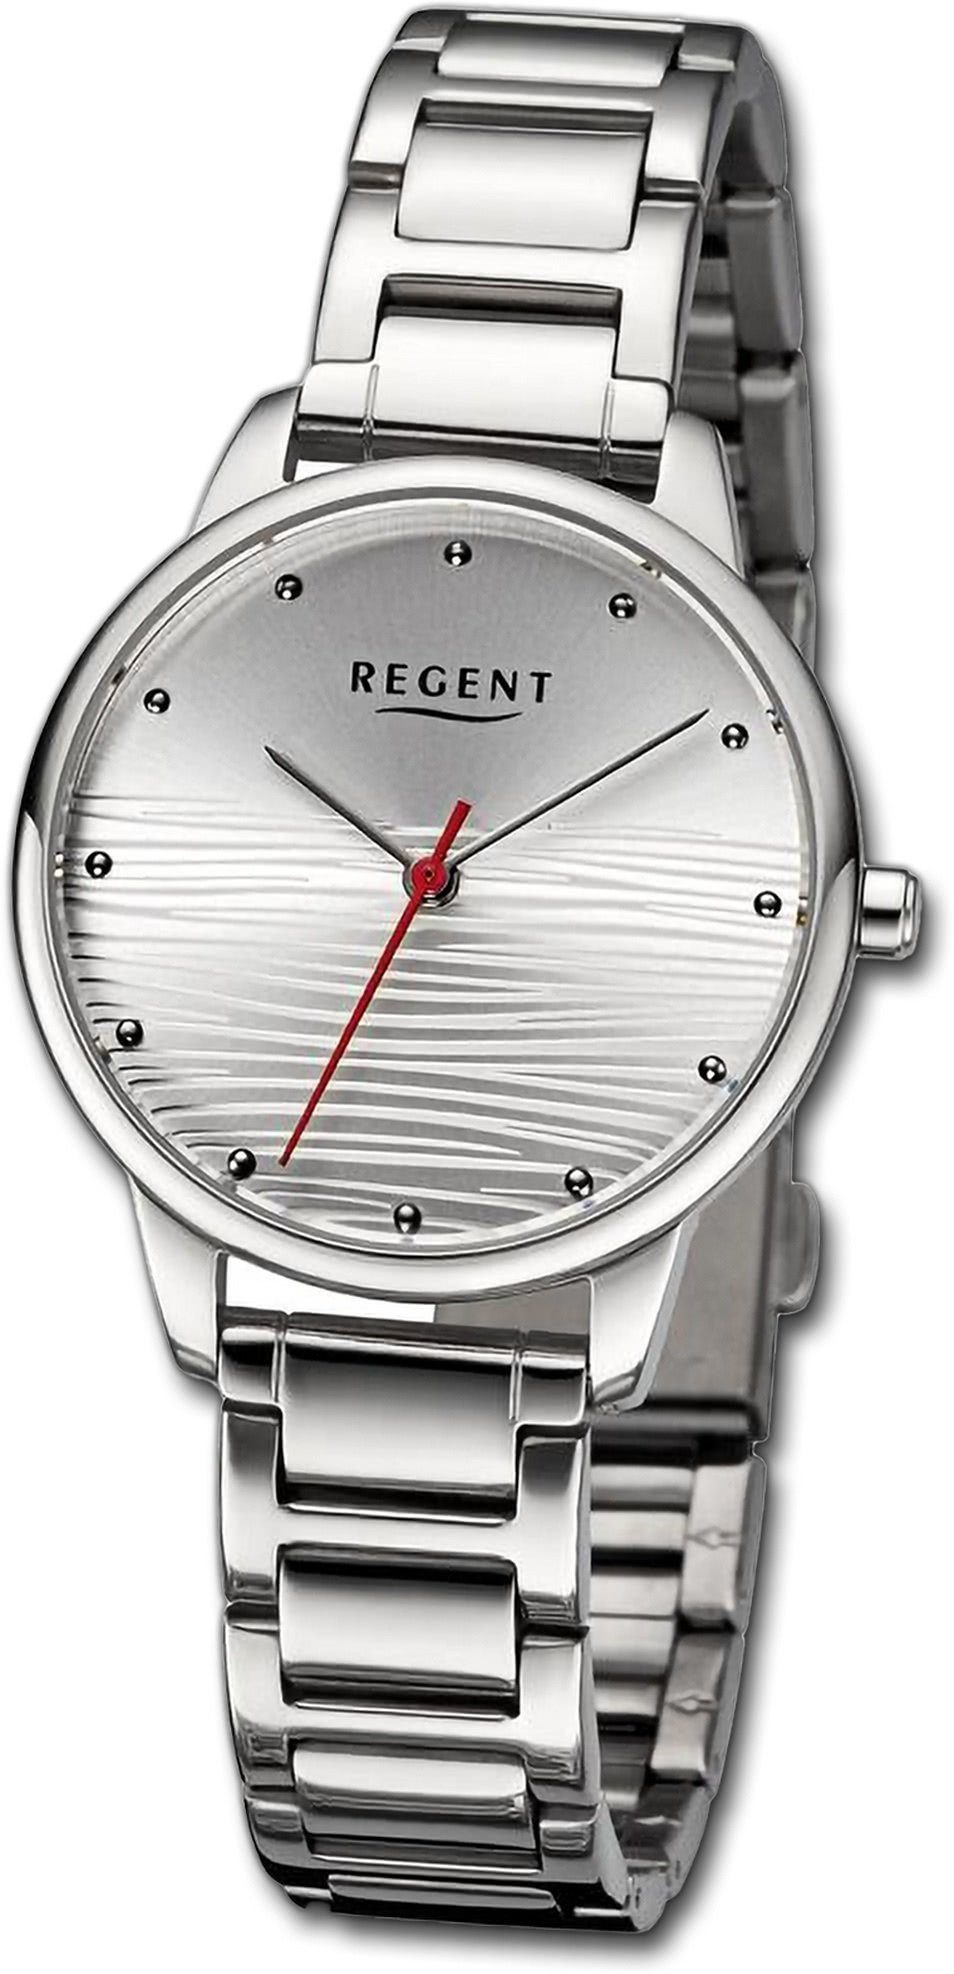 Metallarmband silber, Quarzuhr Regent Armbanduhr (ca. groß extra 32mm) Analog, Regent Gehäuse, Damen rundes Damenuhr